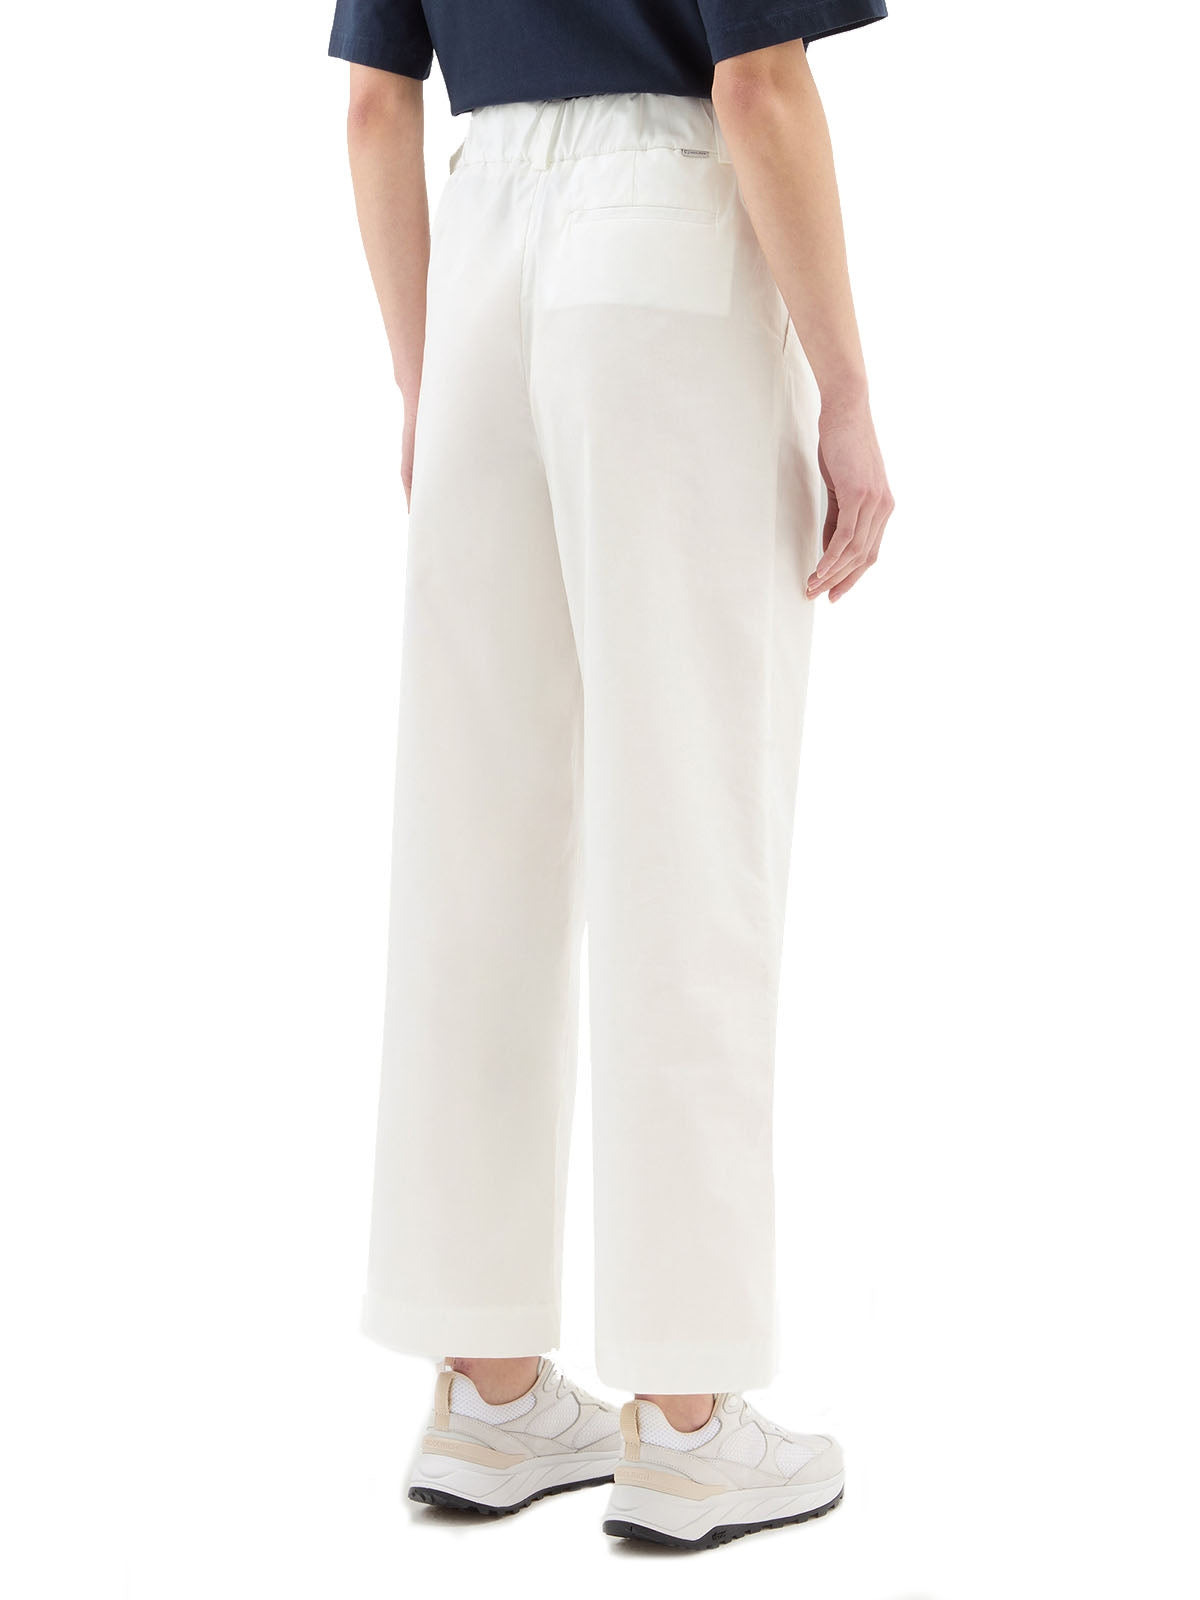 Pantaloni Donna Woolrich - Pantaloni In Popeline Di Puro Cotone - Bianco